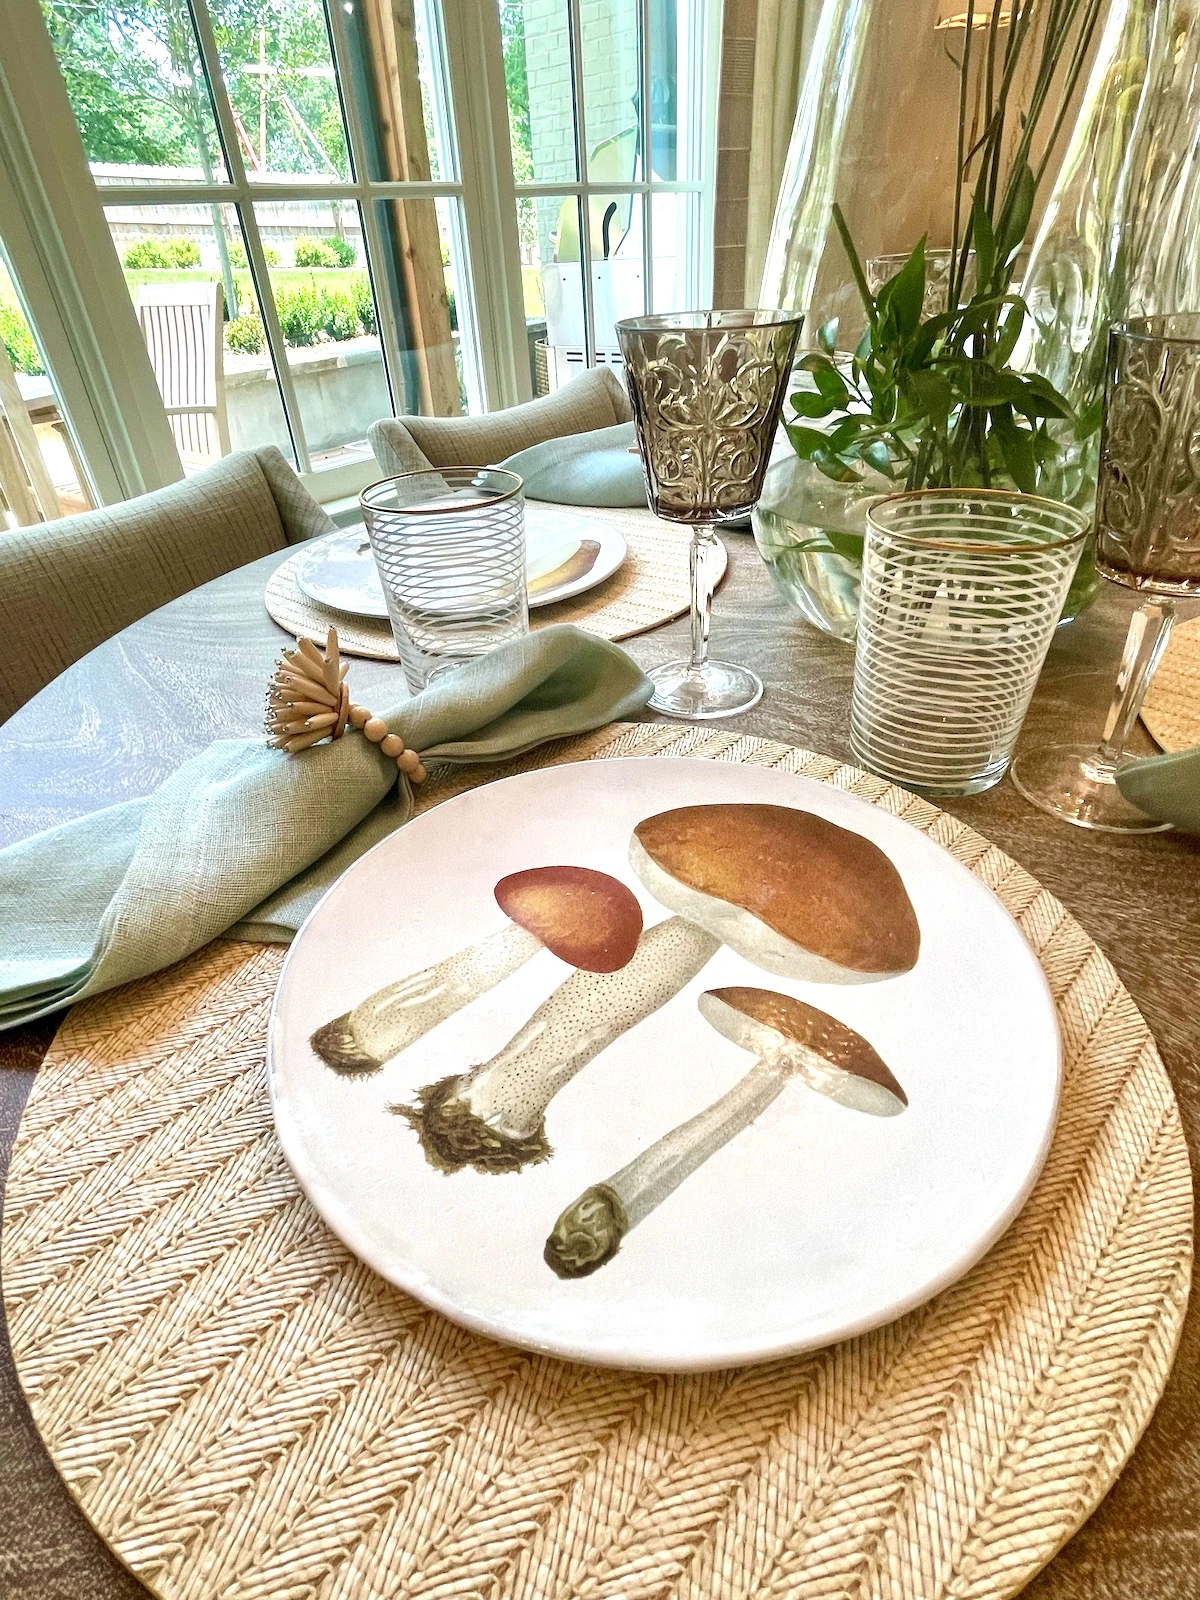 mushroom dinner plates